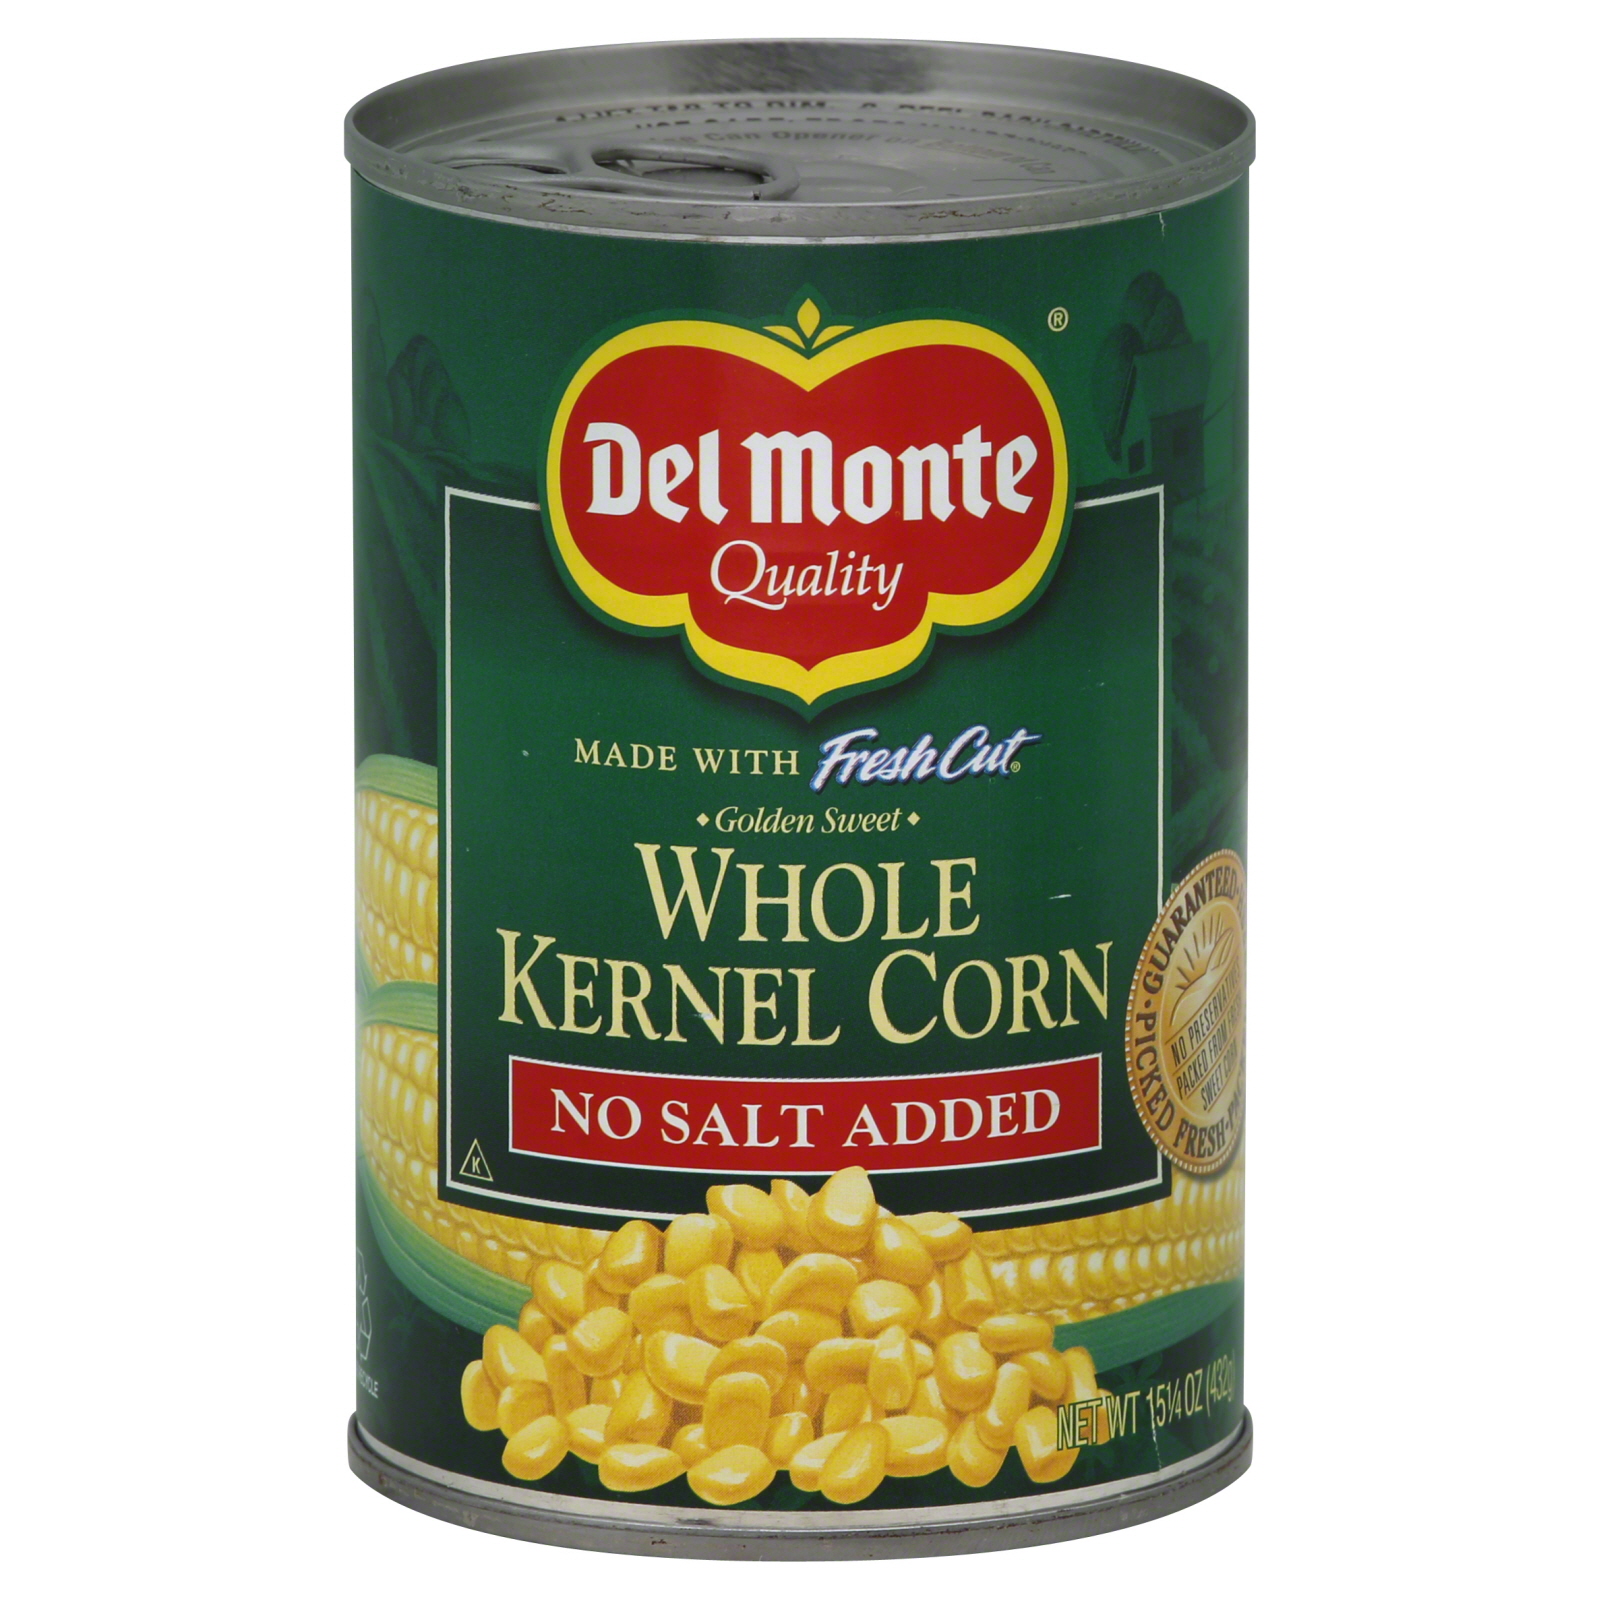 Del Monte Fresh Cut Whole Kernel Corn, Golden Sweet, No Salt Added, 15.25 oz (432 g)